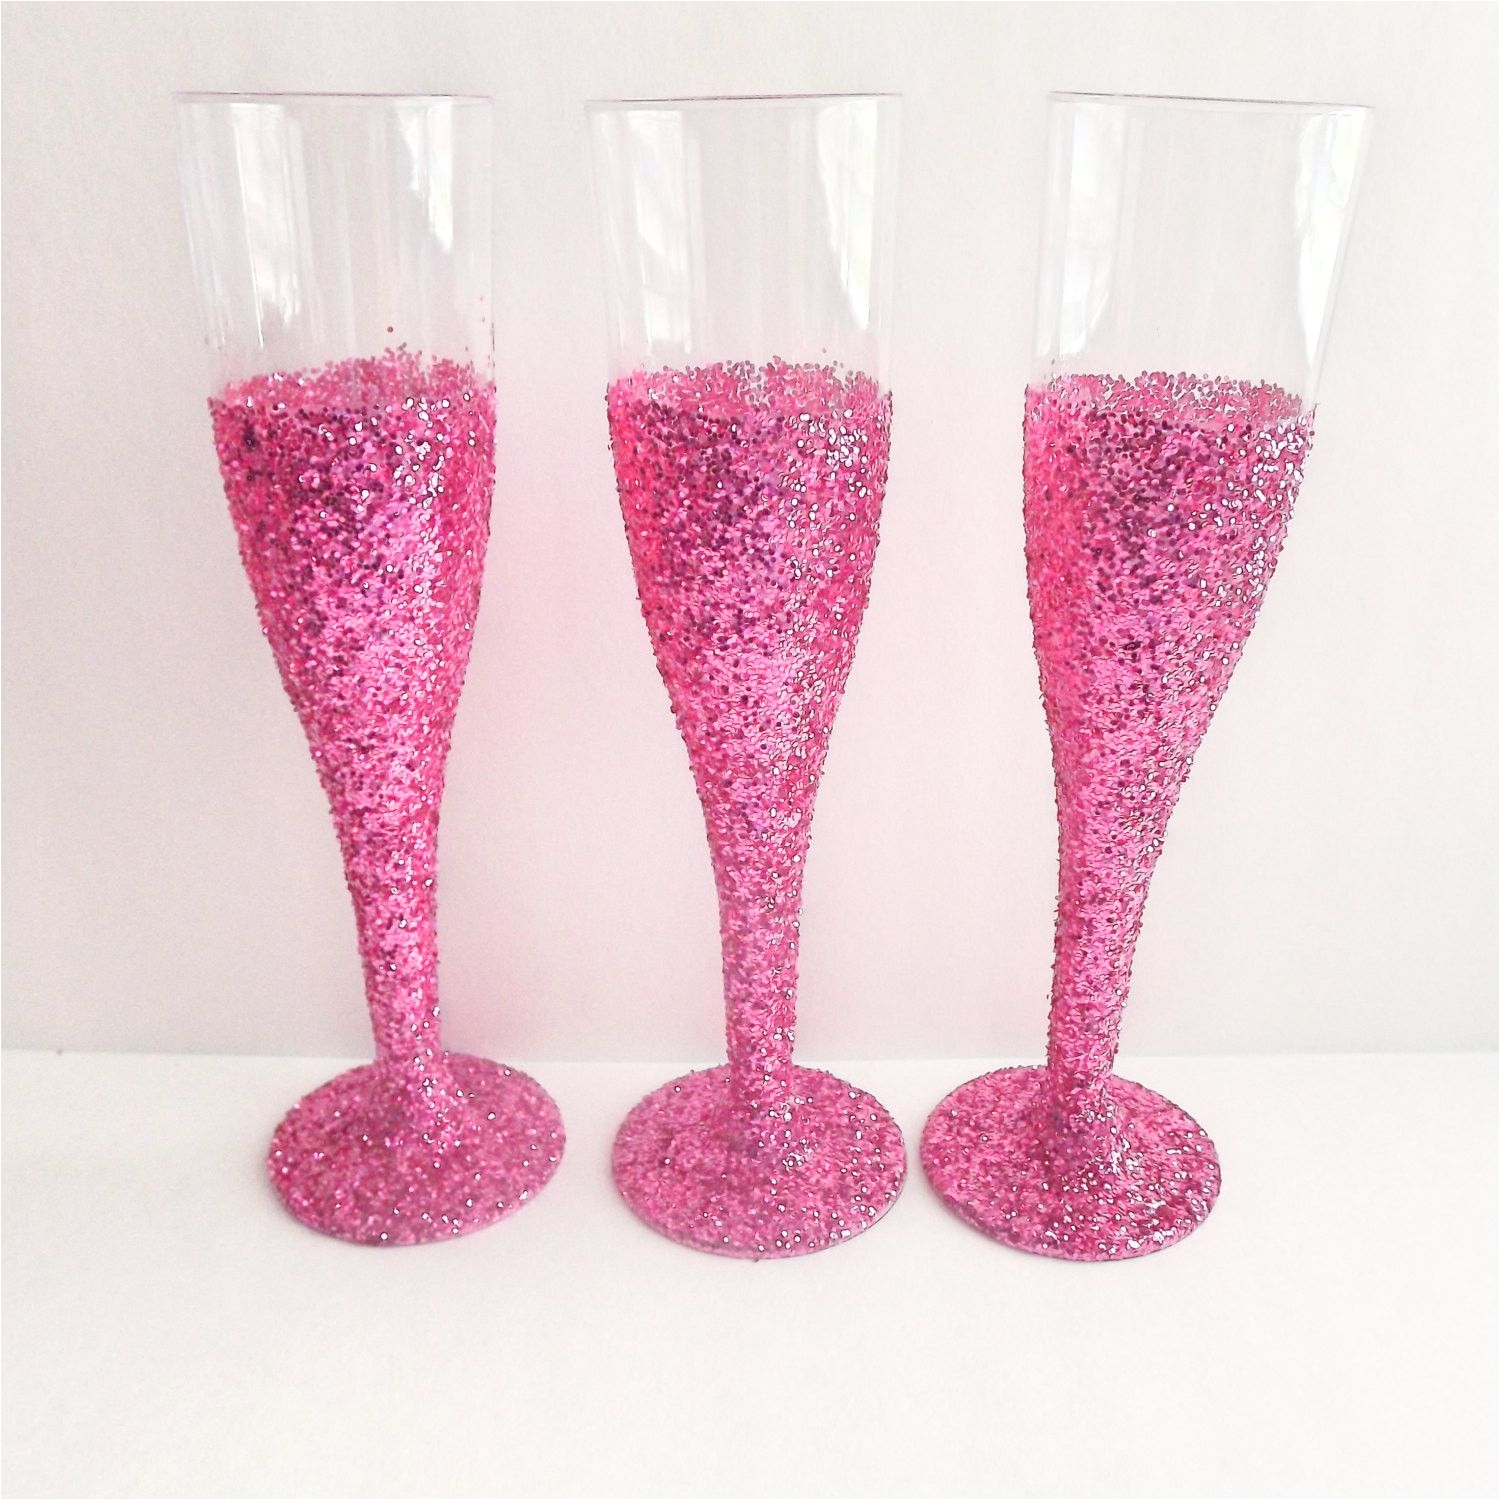 pink glitter champagne flutes set of 12